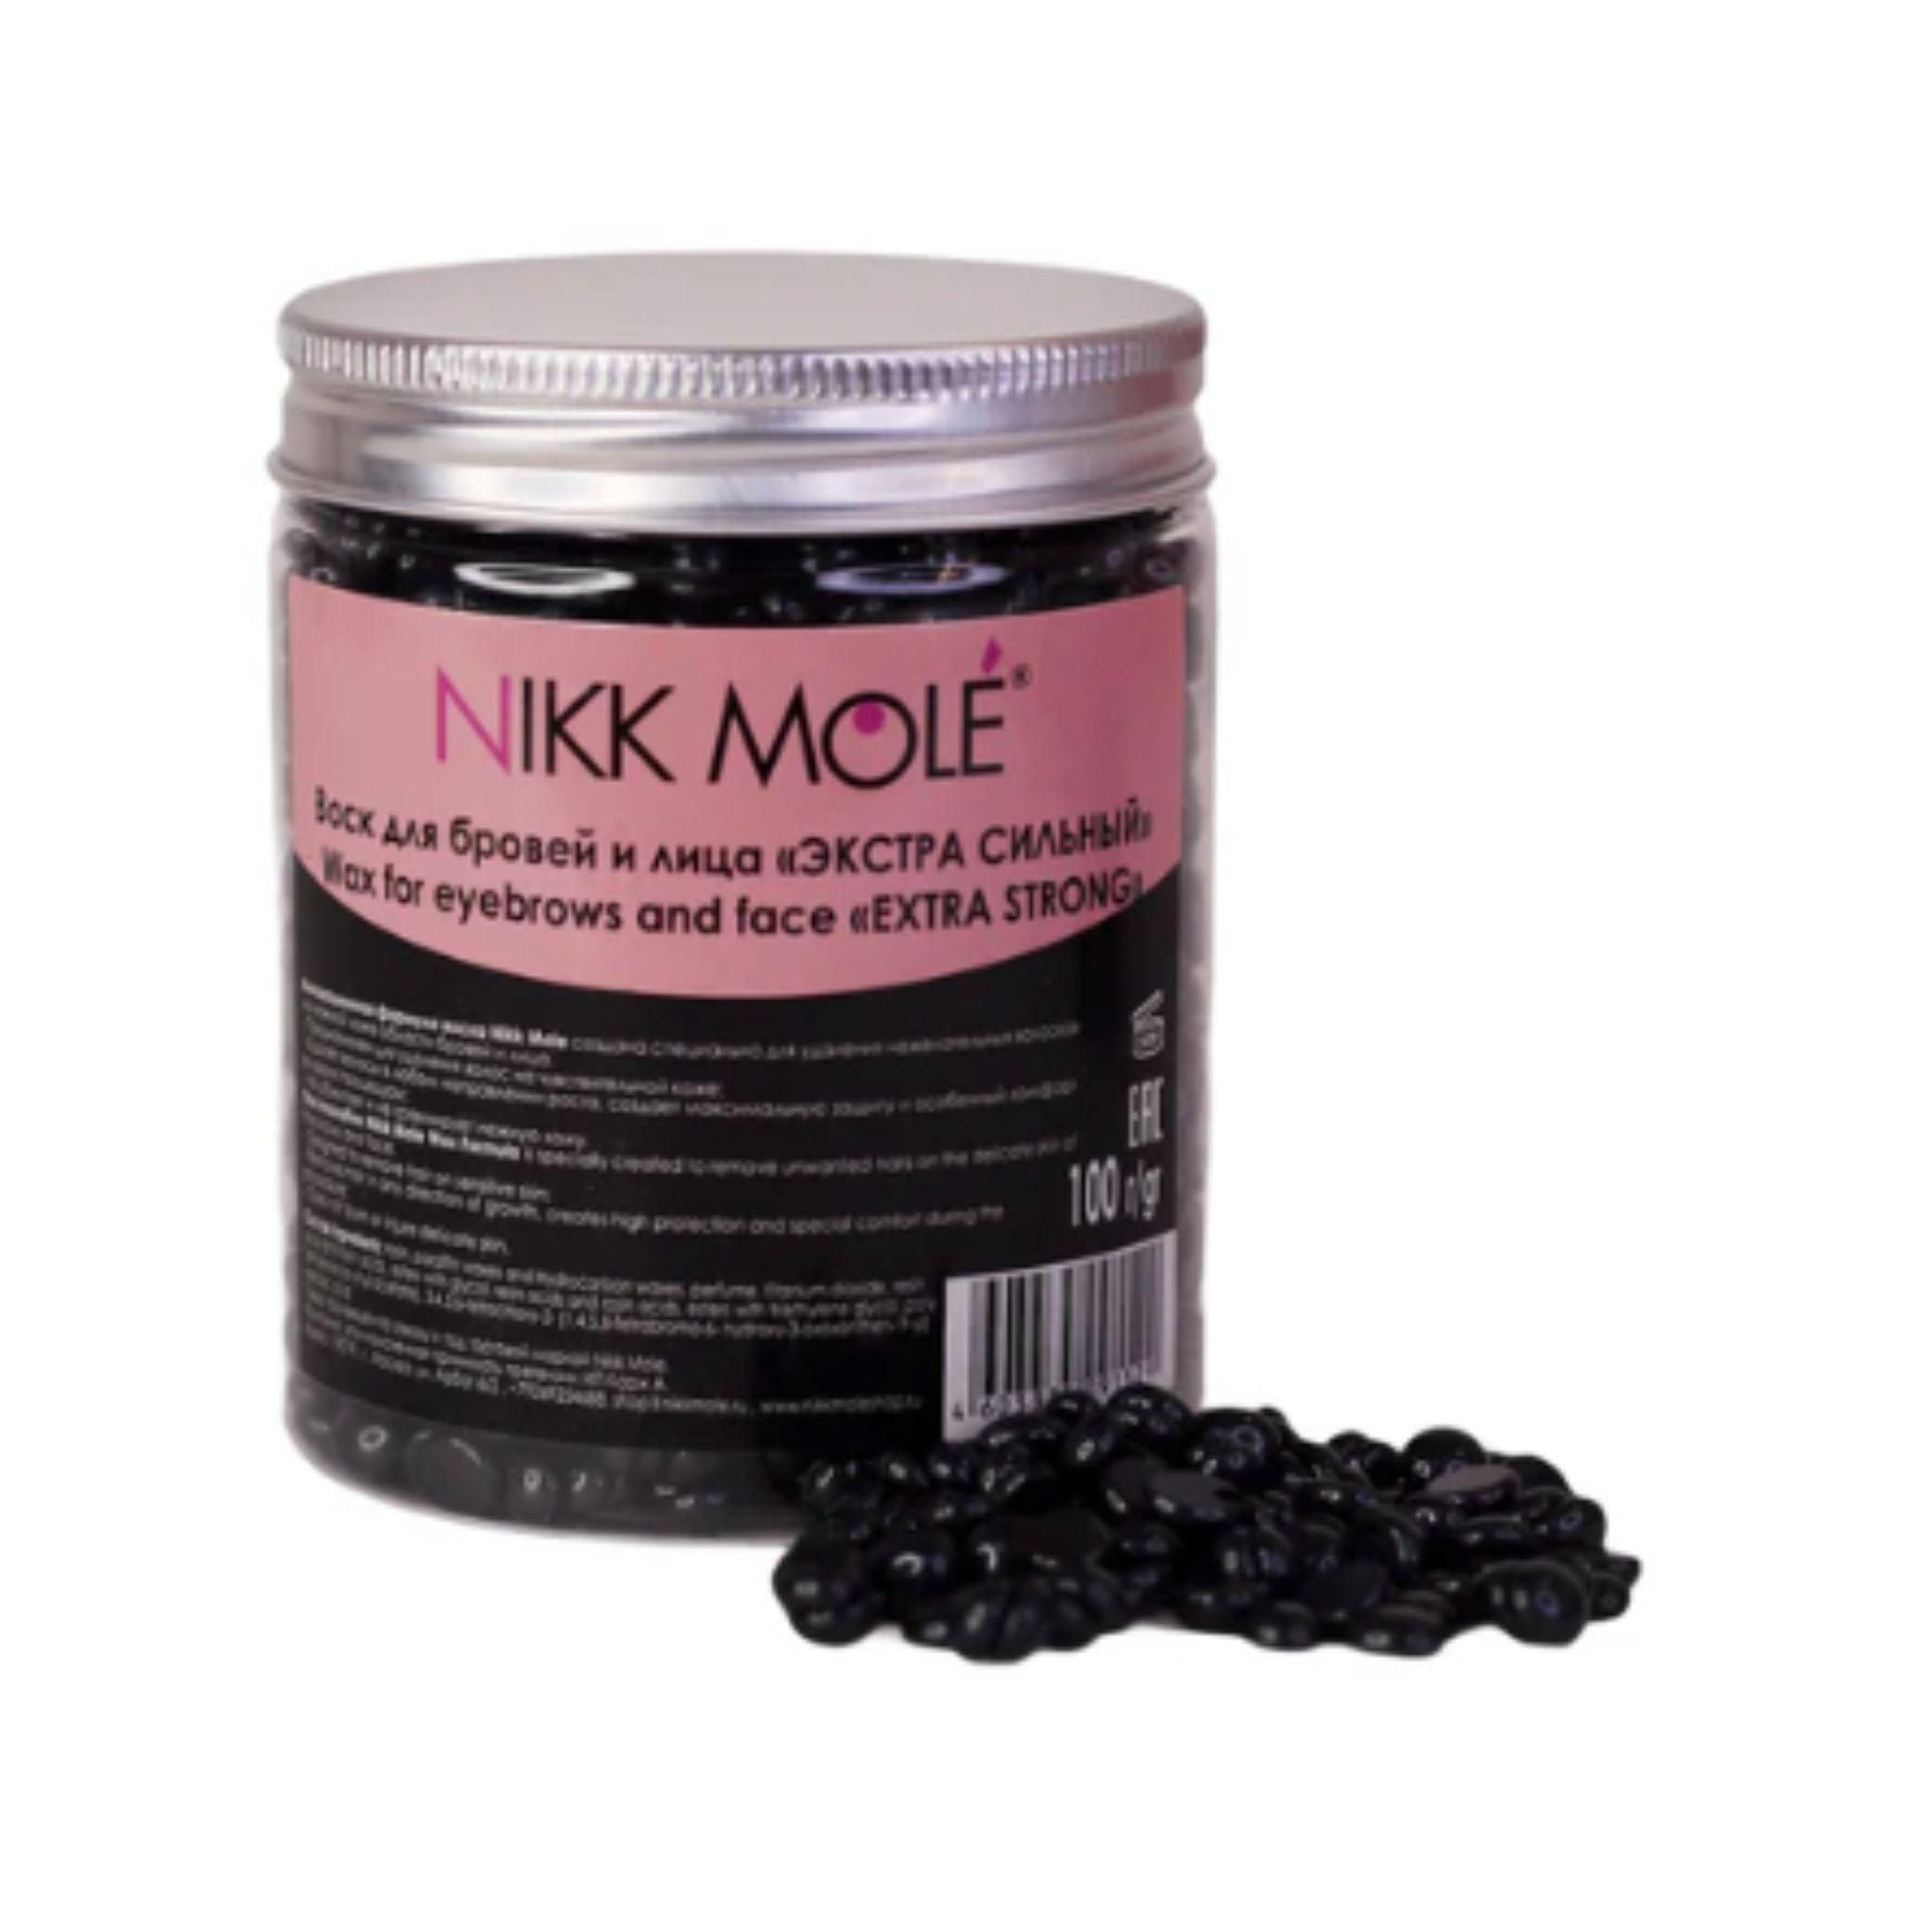 Nikk Mole Wax Pearls - The Beauty House Shop